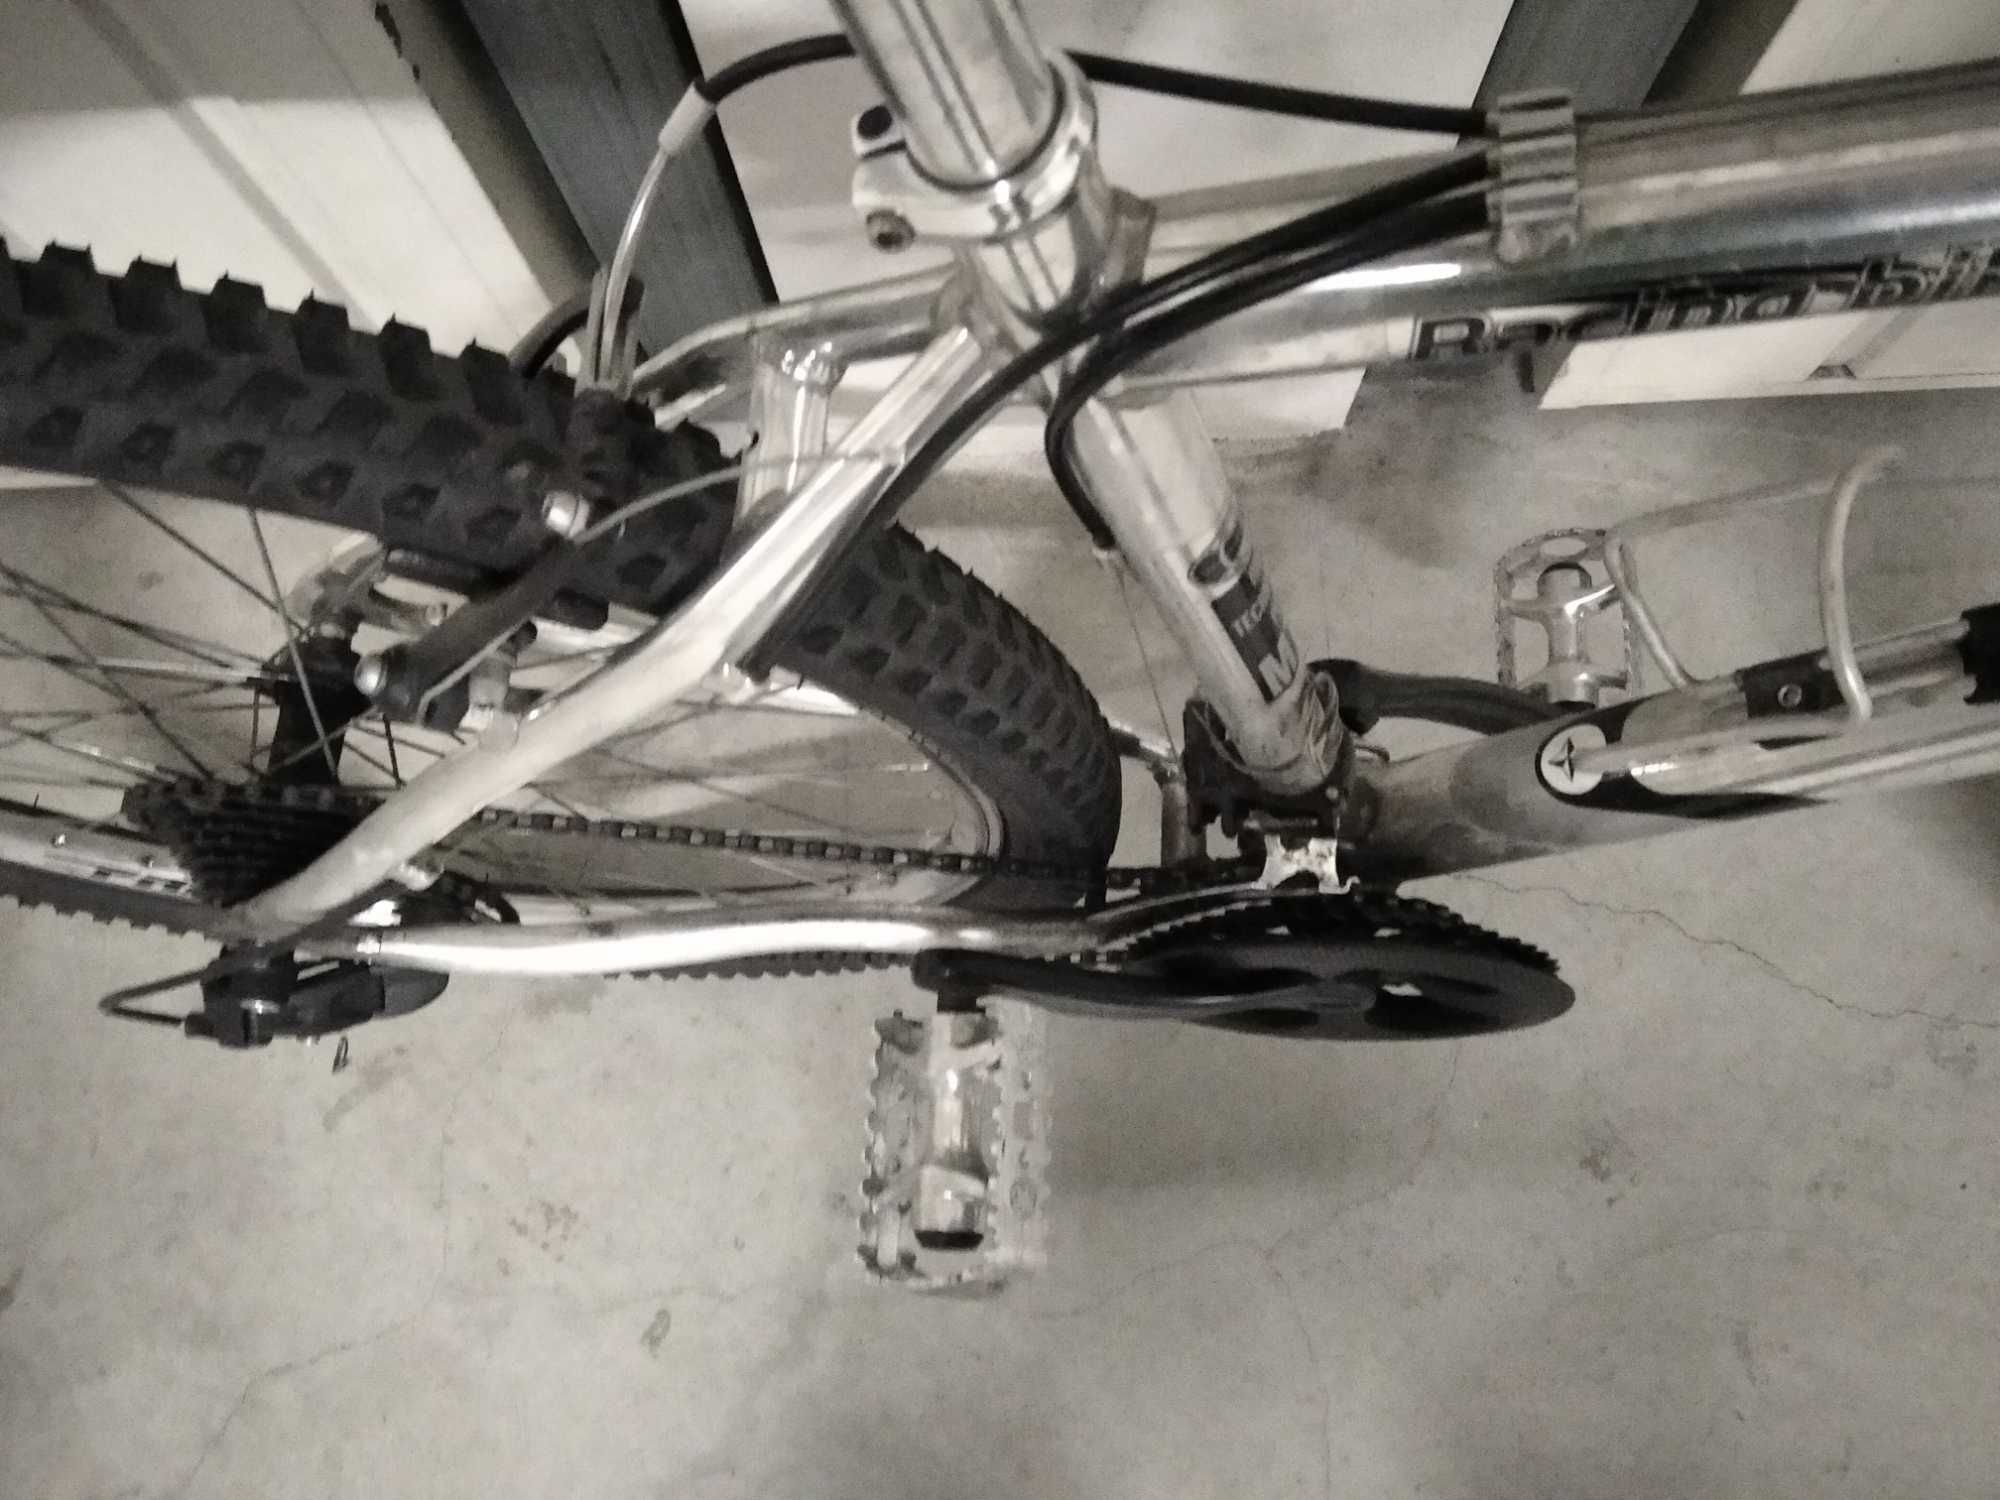 Bicicleta BTT alumínio